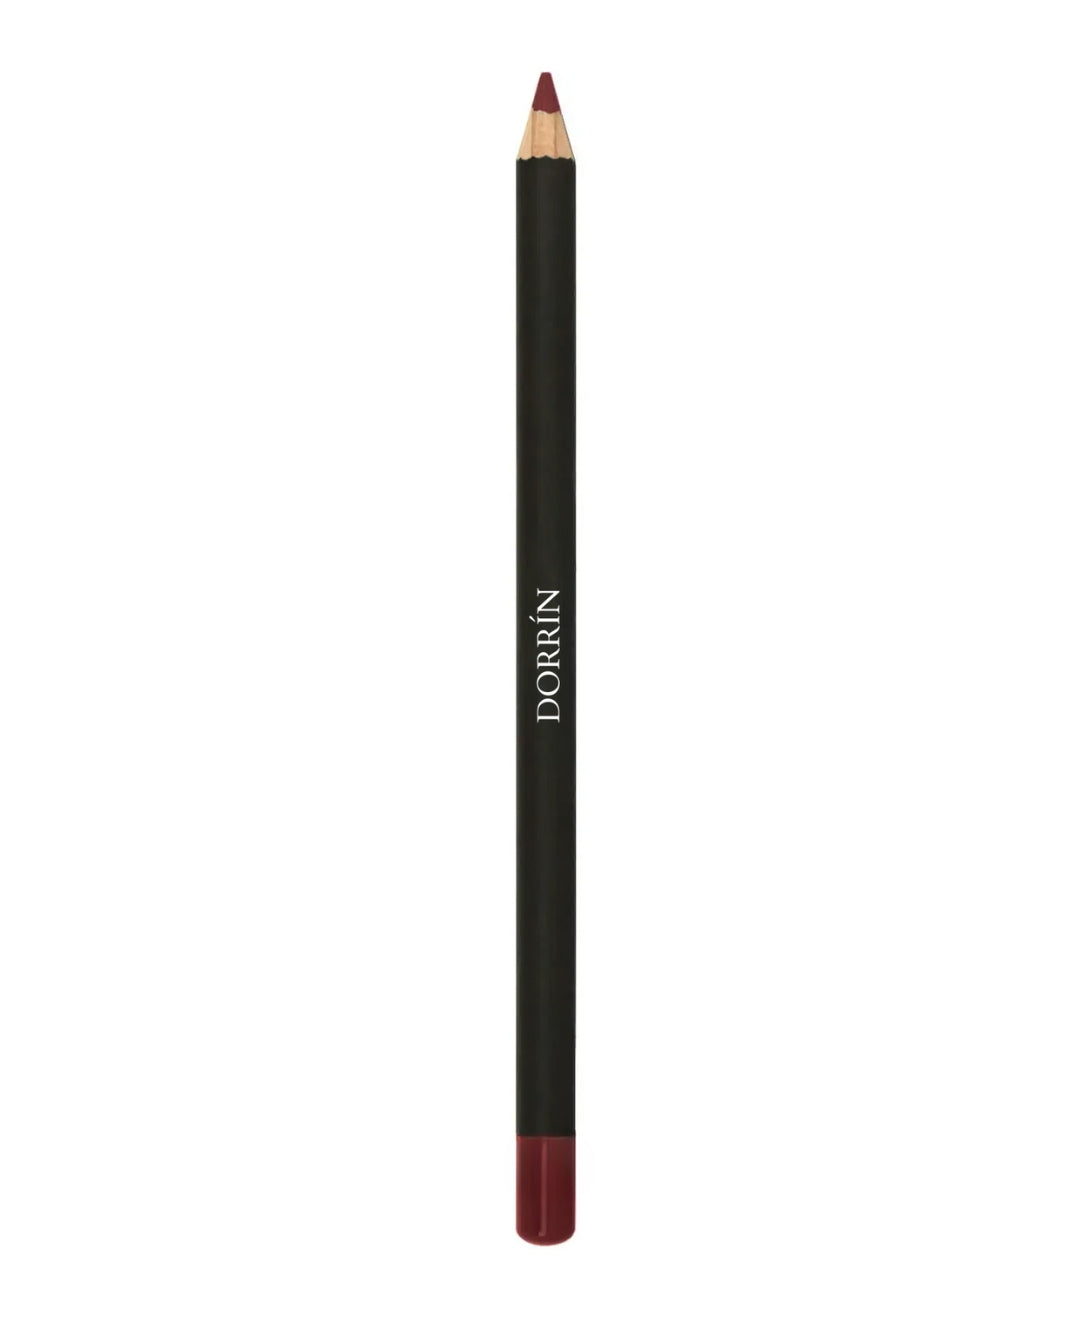 The Rose Lip Pencil